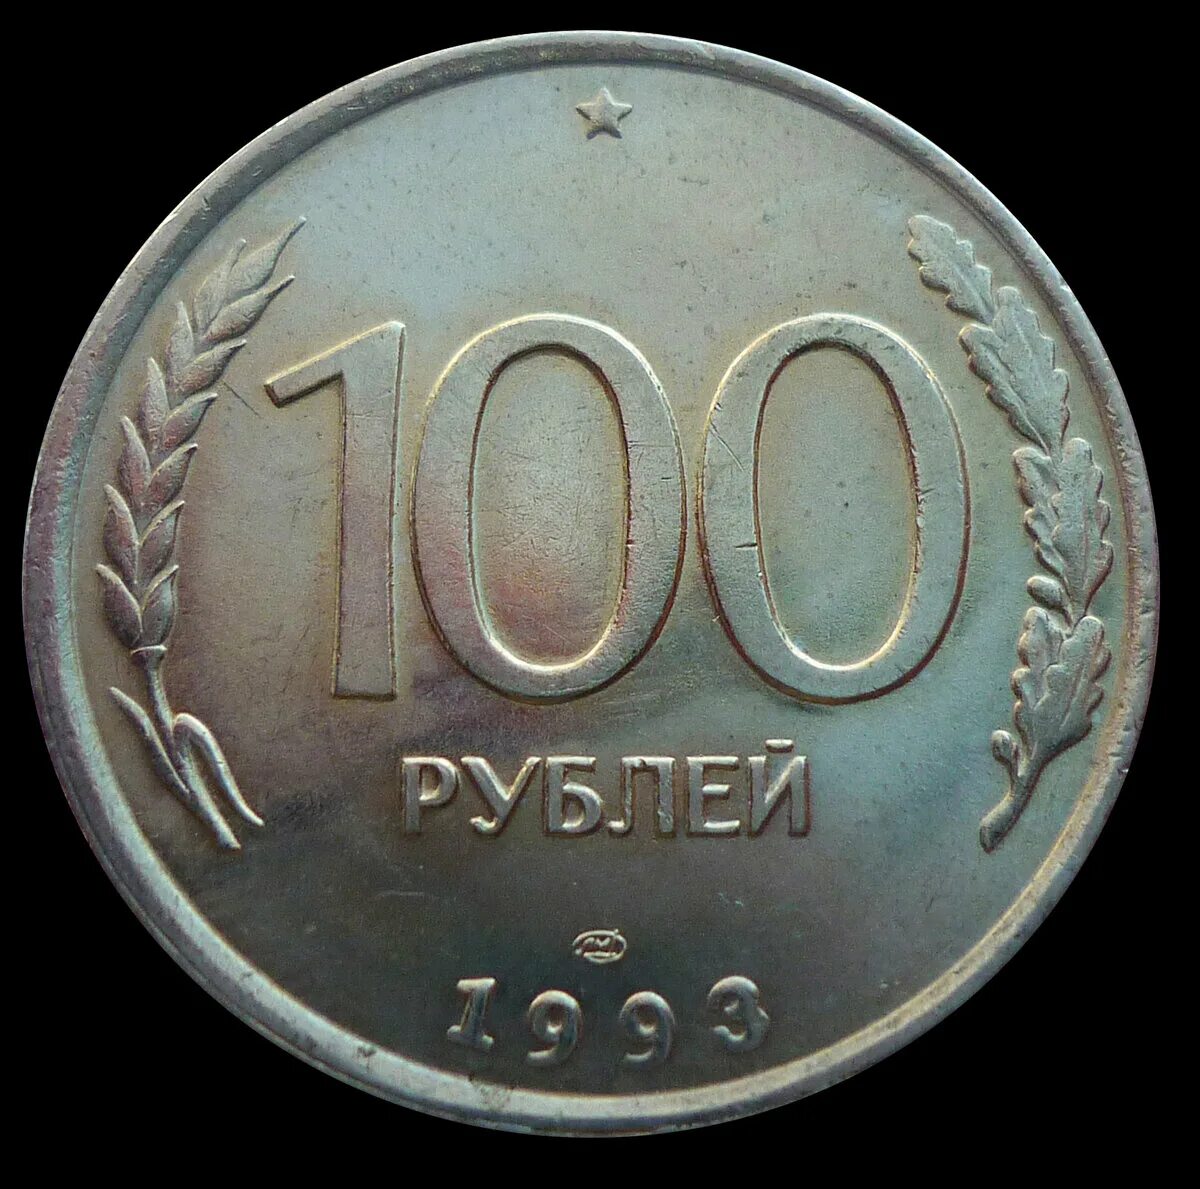 100 Рублей 1993 года. Монеты 1993 года. 100 Руб СССР монета. Рубли 1993. 700 800 рублей